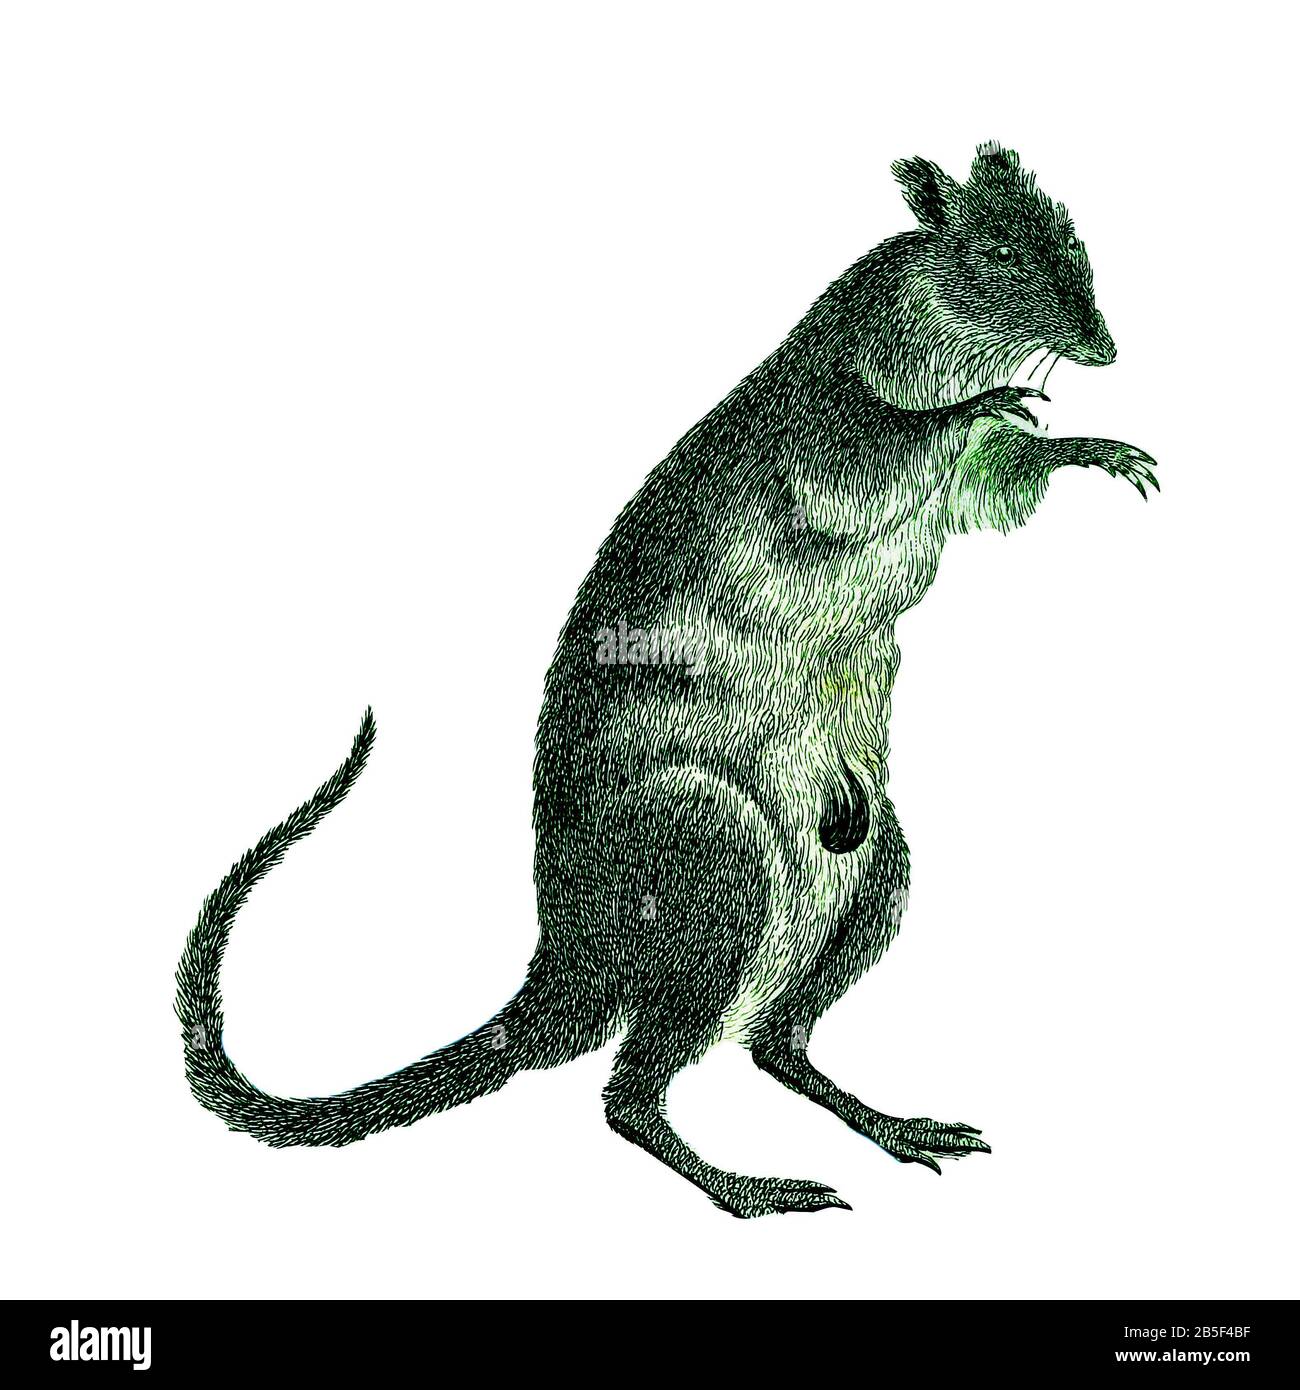 🌸 Original Artwork Release! 🌸 Merriam's Kangaroo Rat, ink and watercolor.  I just put four small, brand new original ink and water... | Instagram